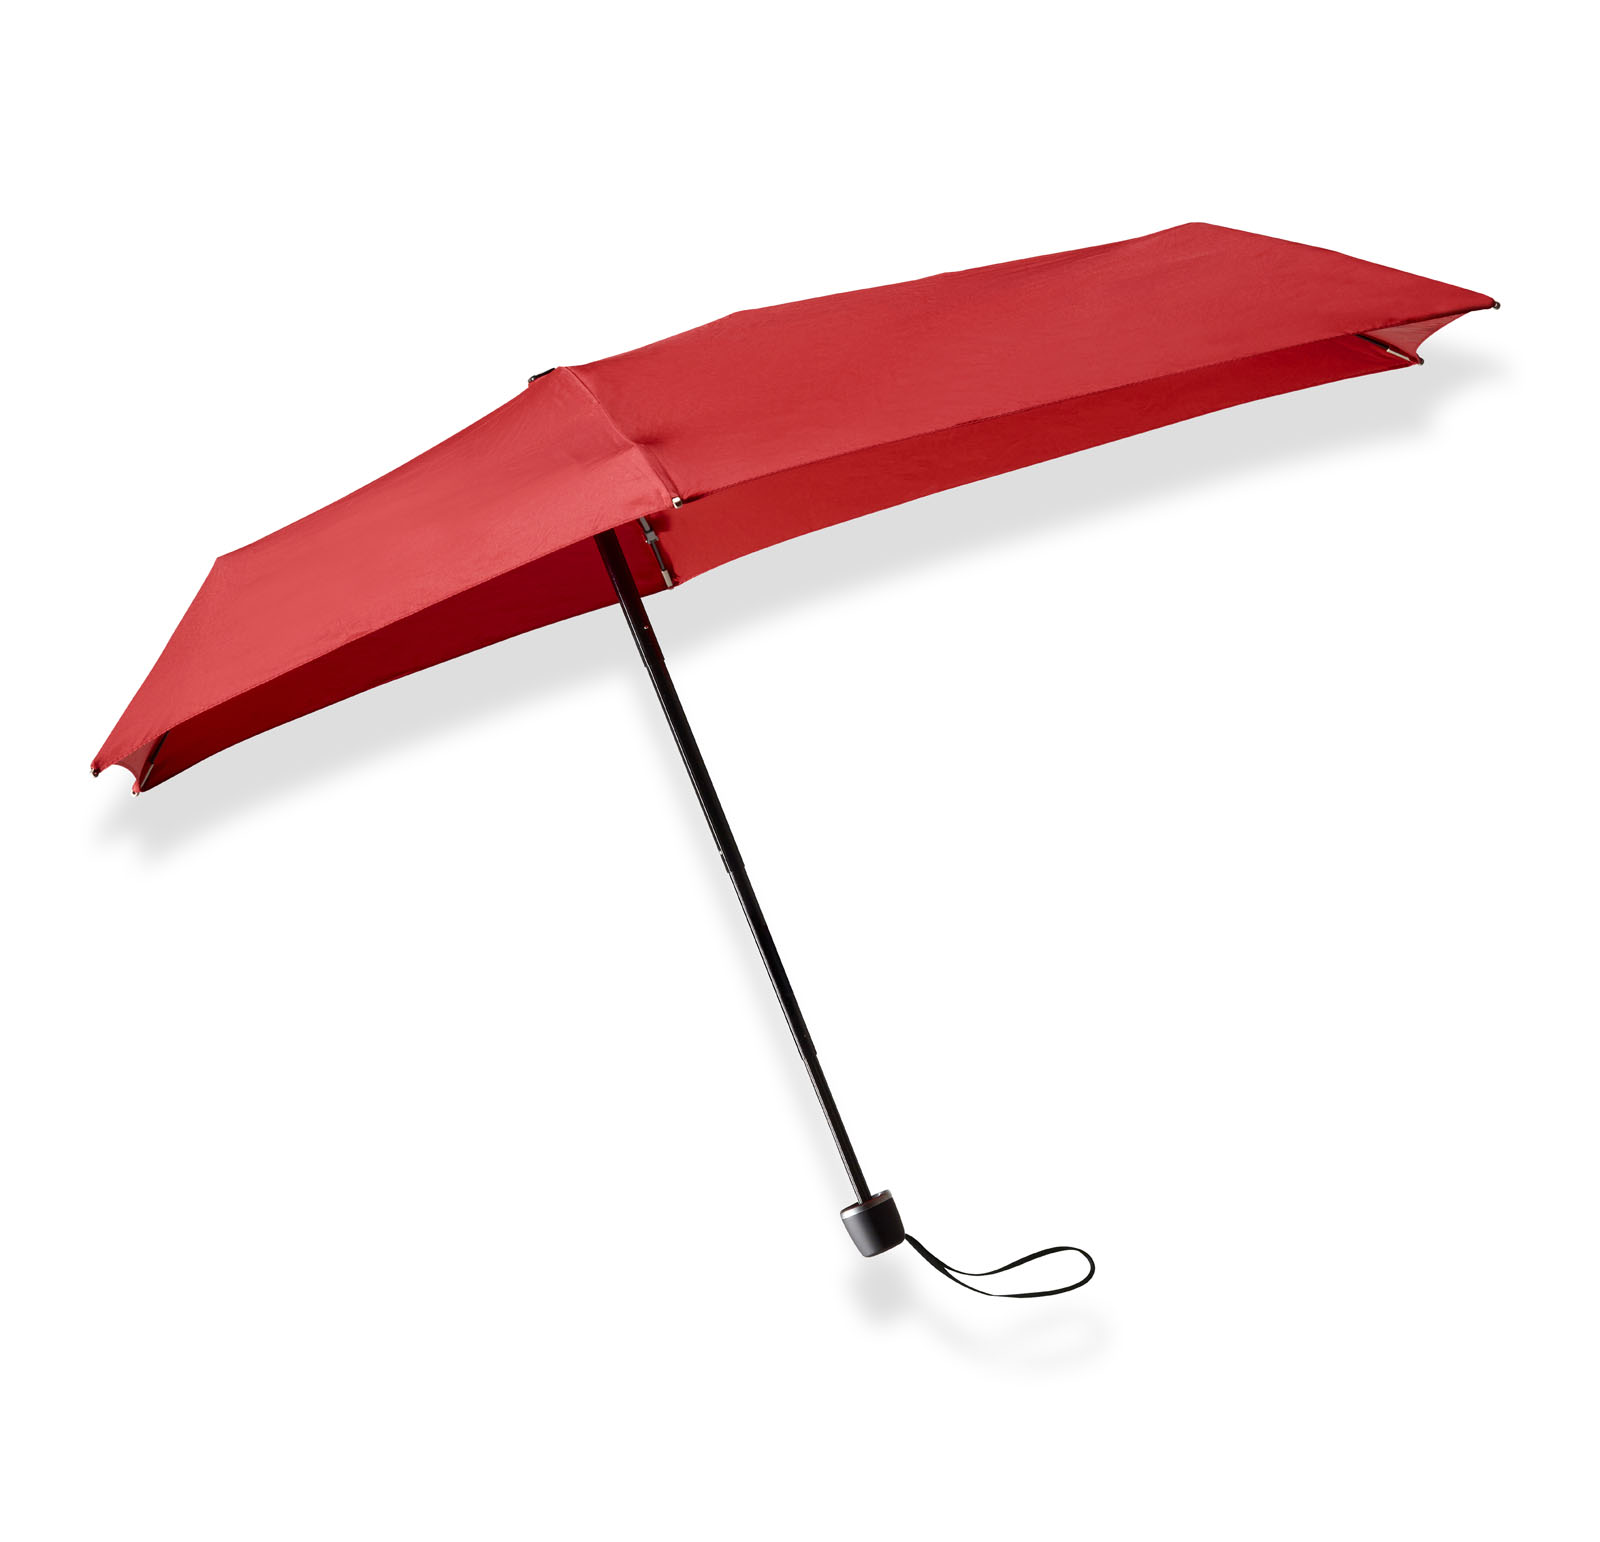 Rode paraplu micro kopen? senz° micro passion red